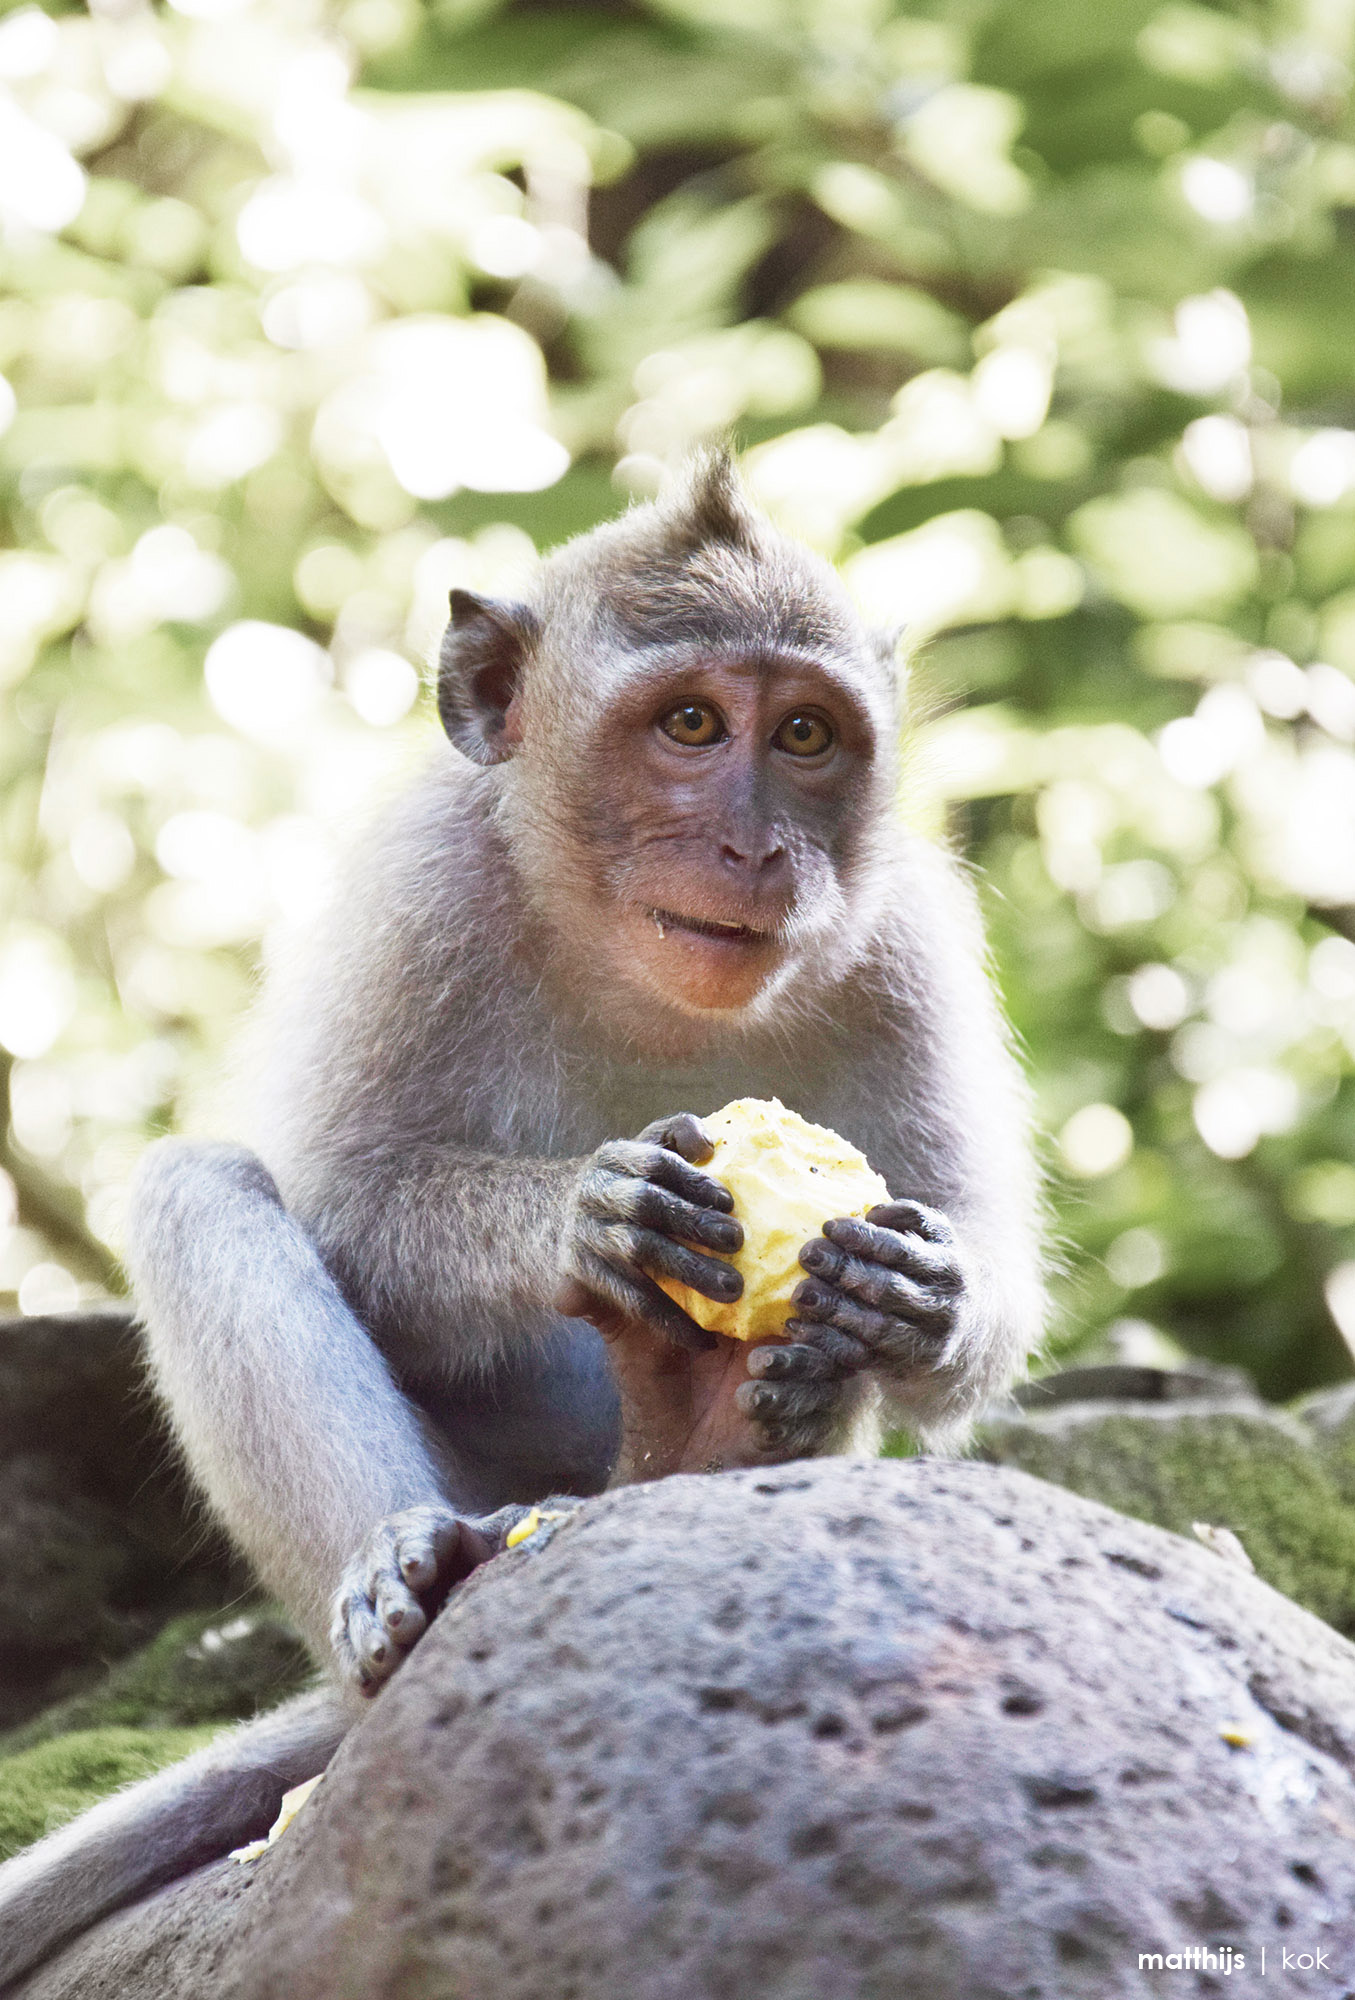 Monkey Forest, Bali | Photo by Matthijs Kok